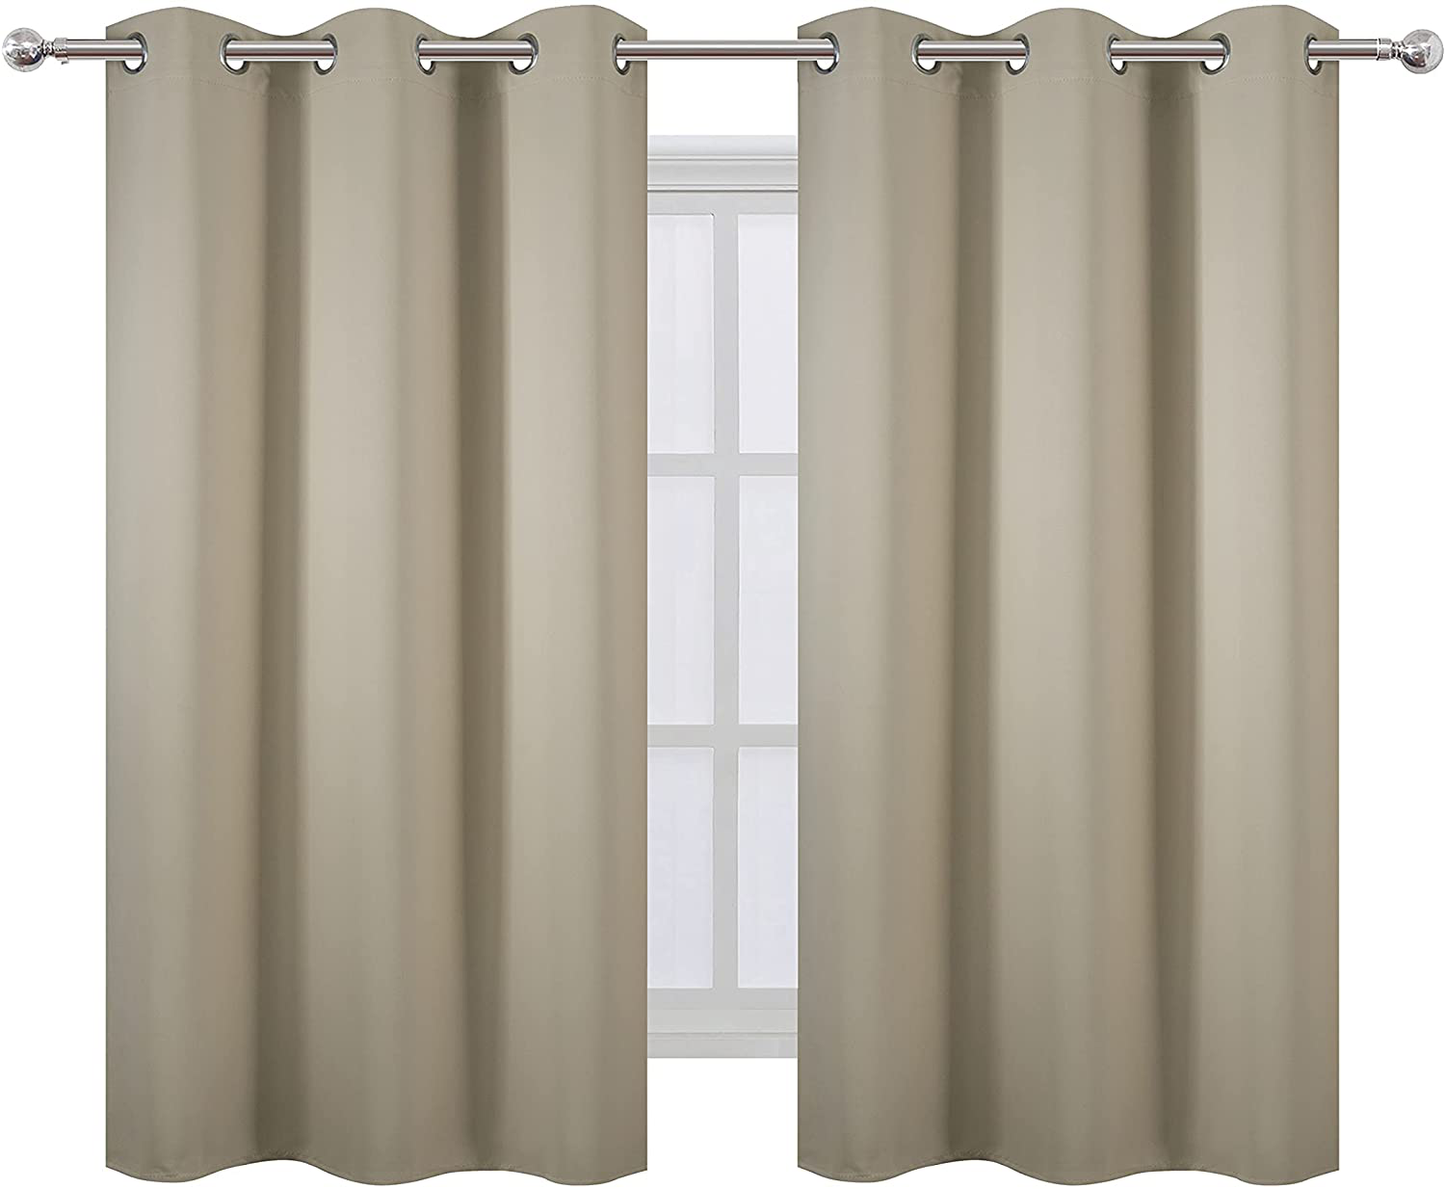 LEMOMO Beige Thermal Blackout Curtains/38 x 54 Inch/Set of 2 Panels Room Darkening Curtains for Bedroom